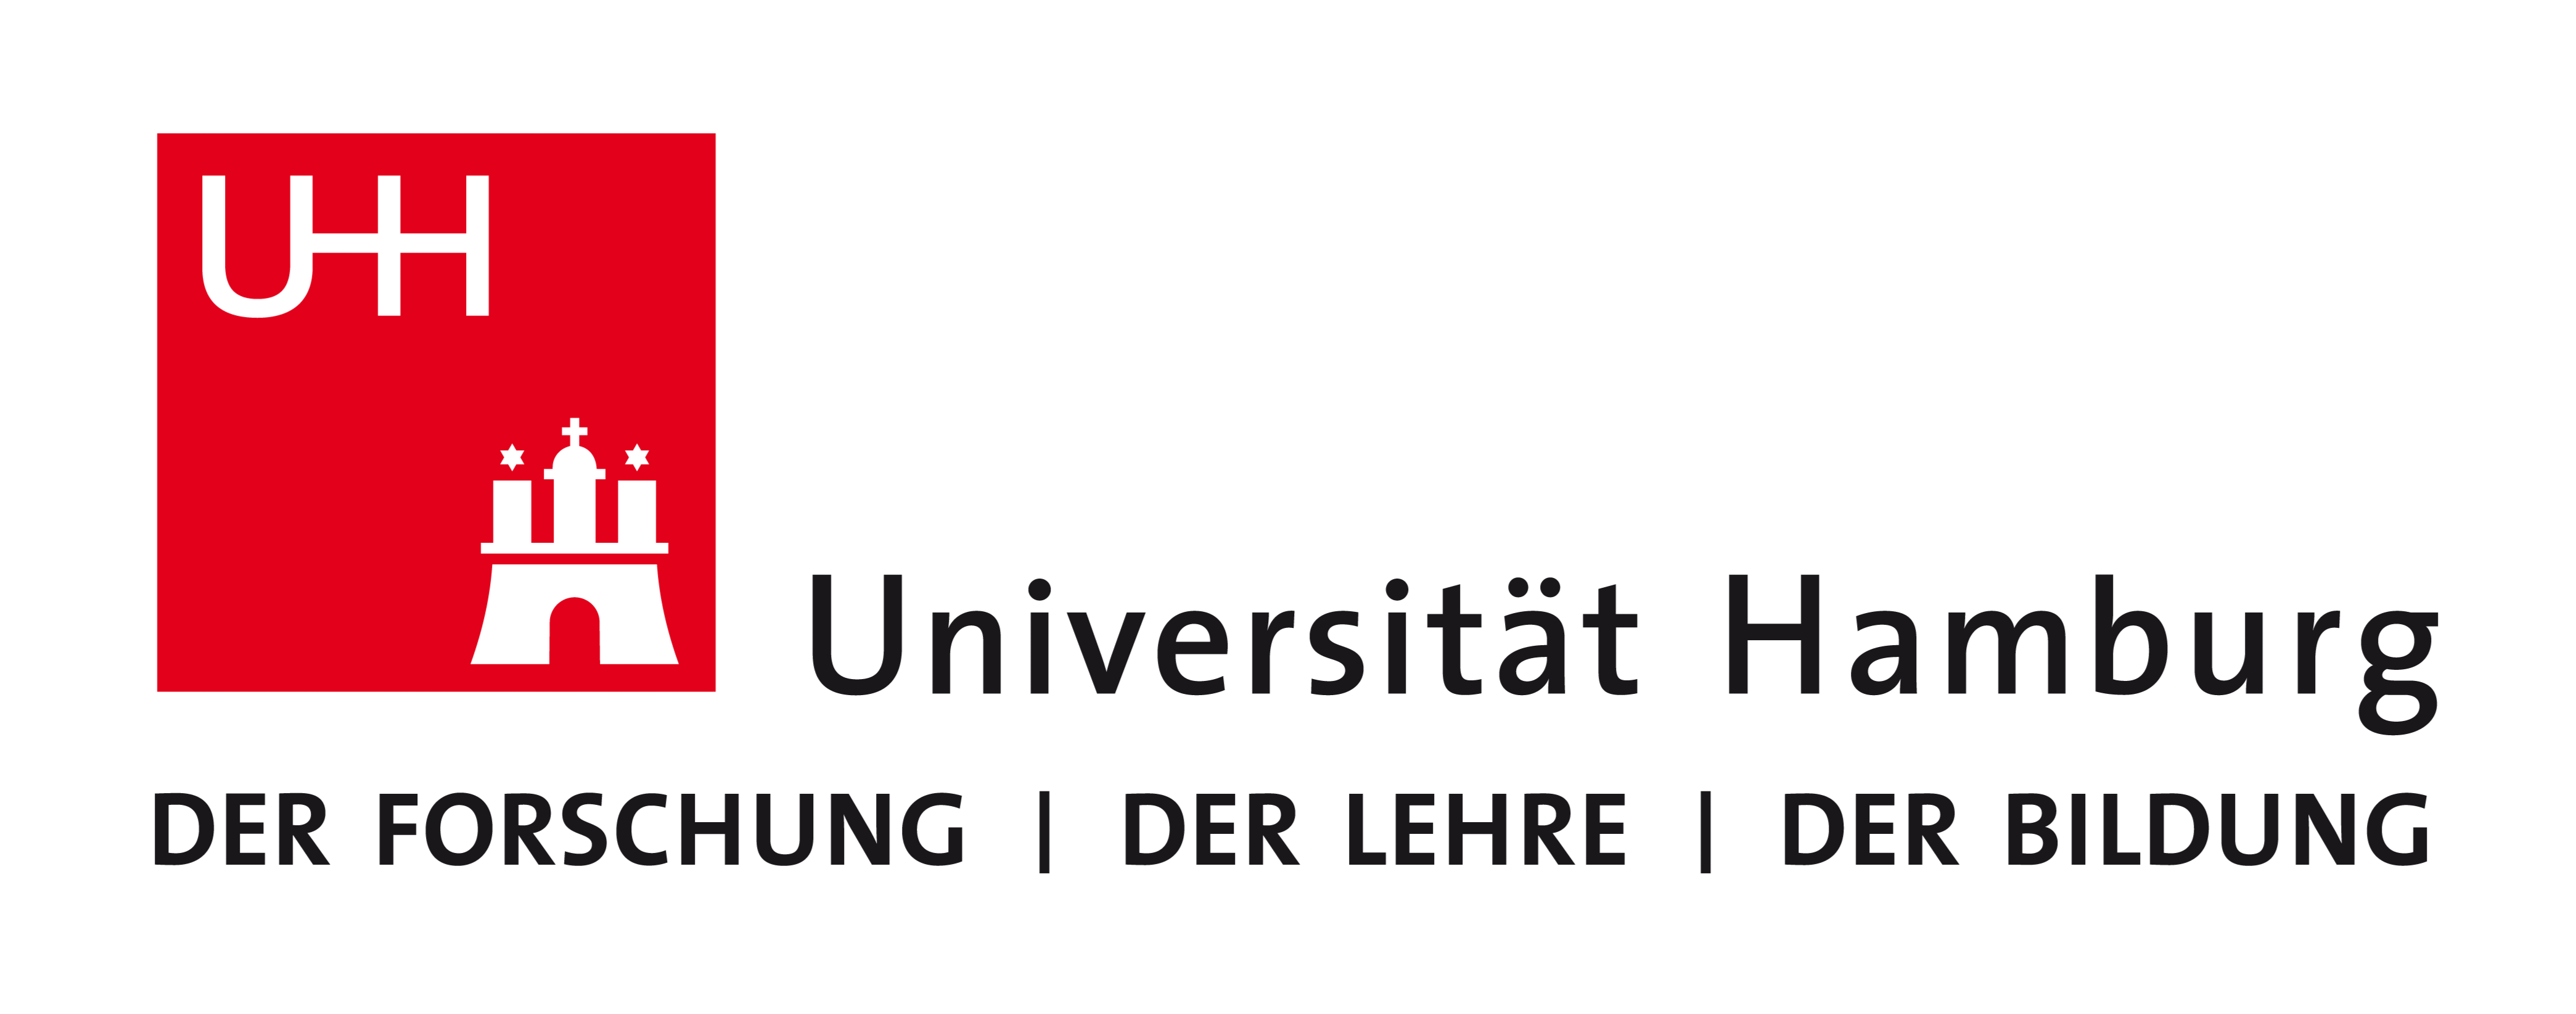 Universität Hamburg logo